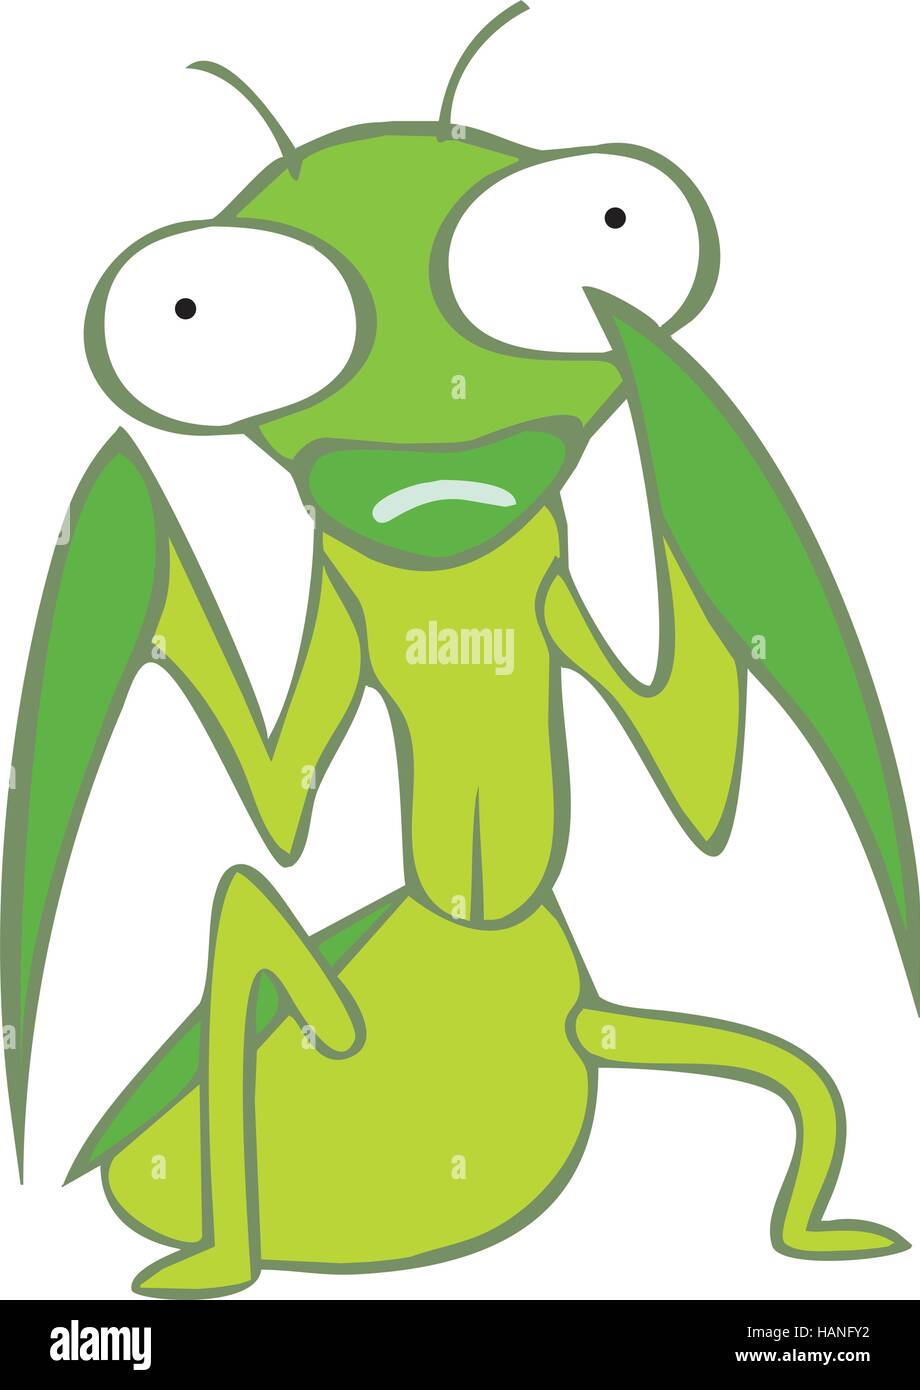 Praying mantis shape Imágenes vectoriales de stock - Alamy